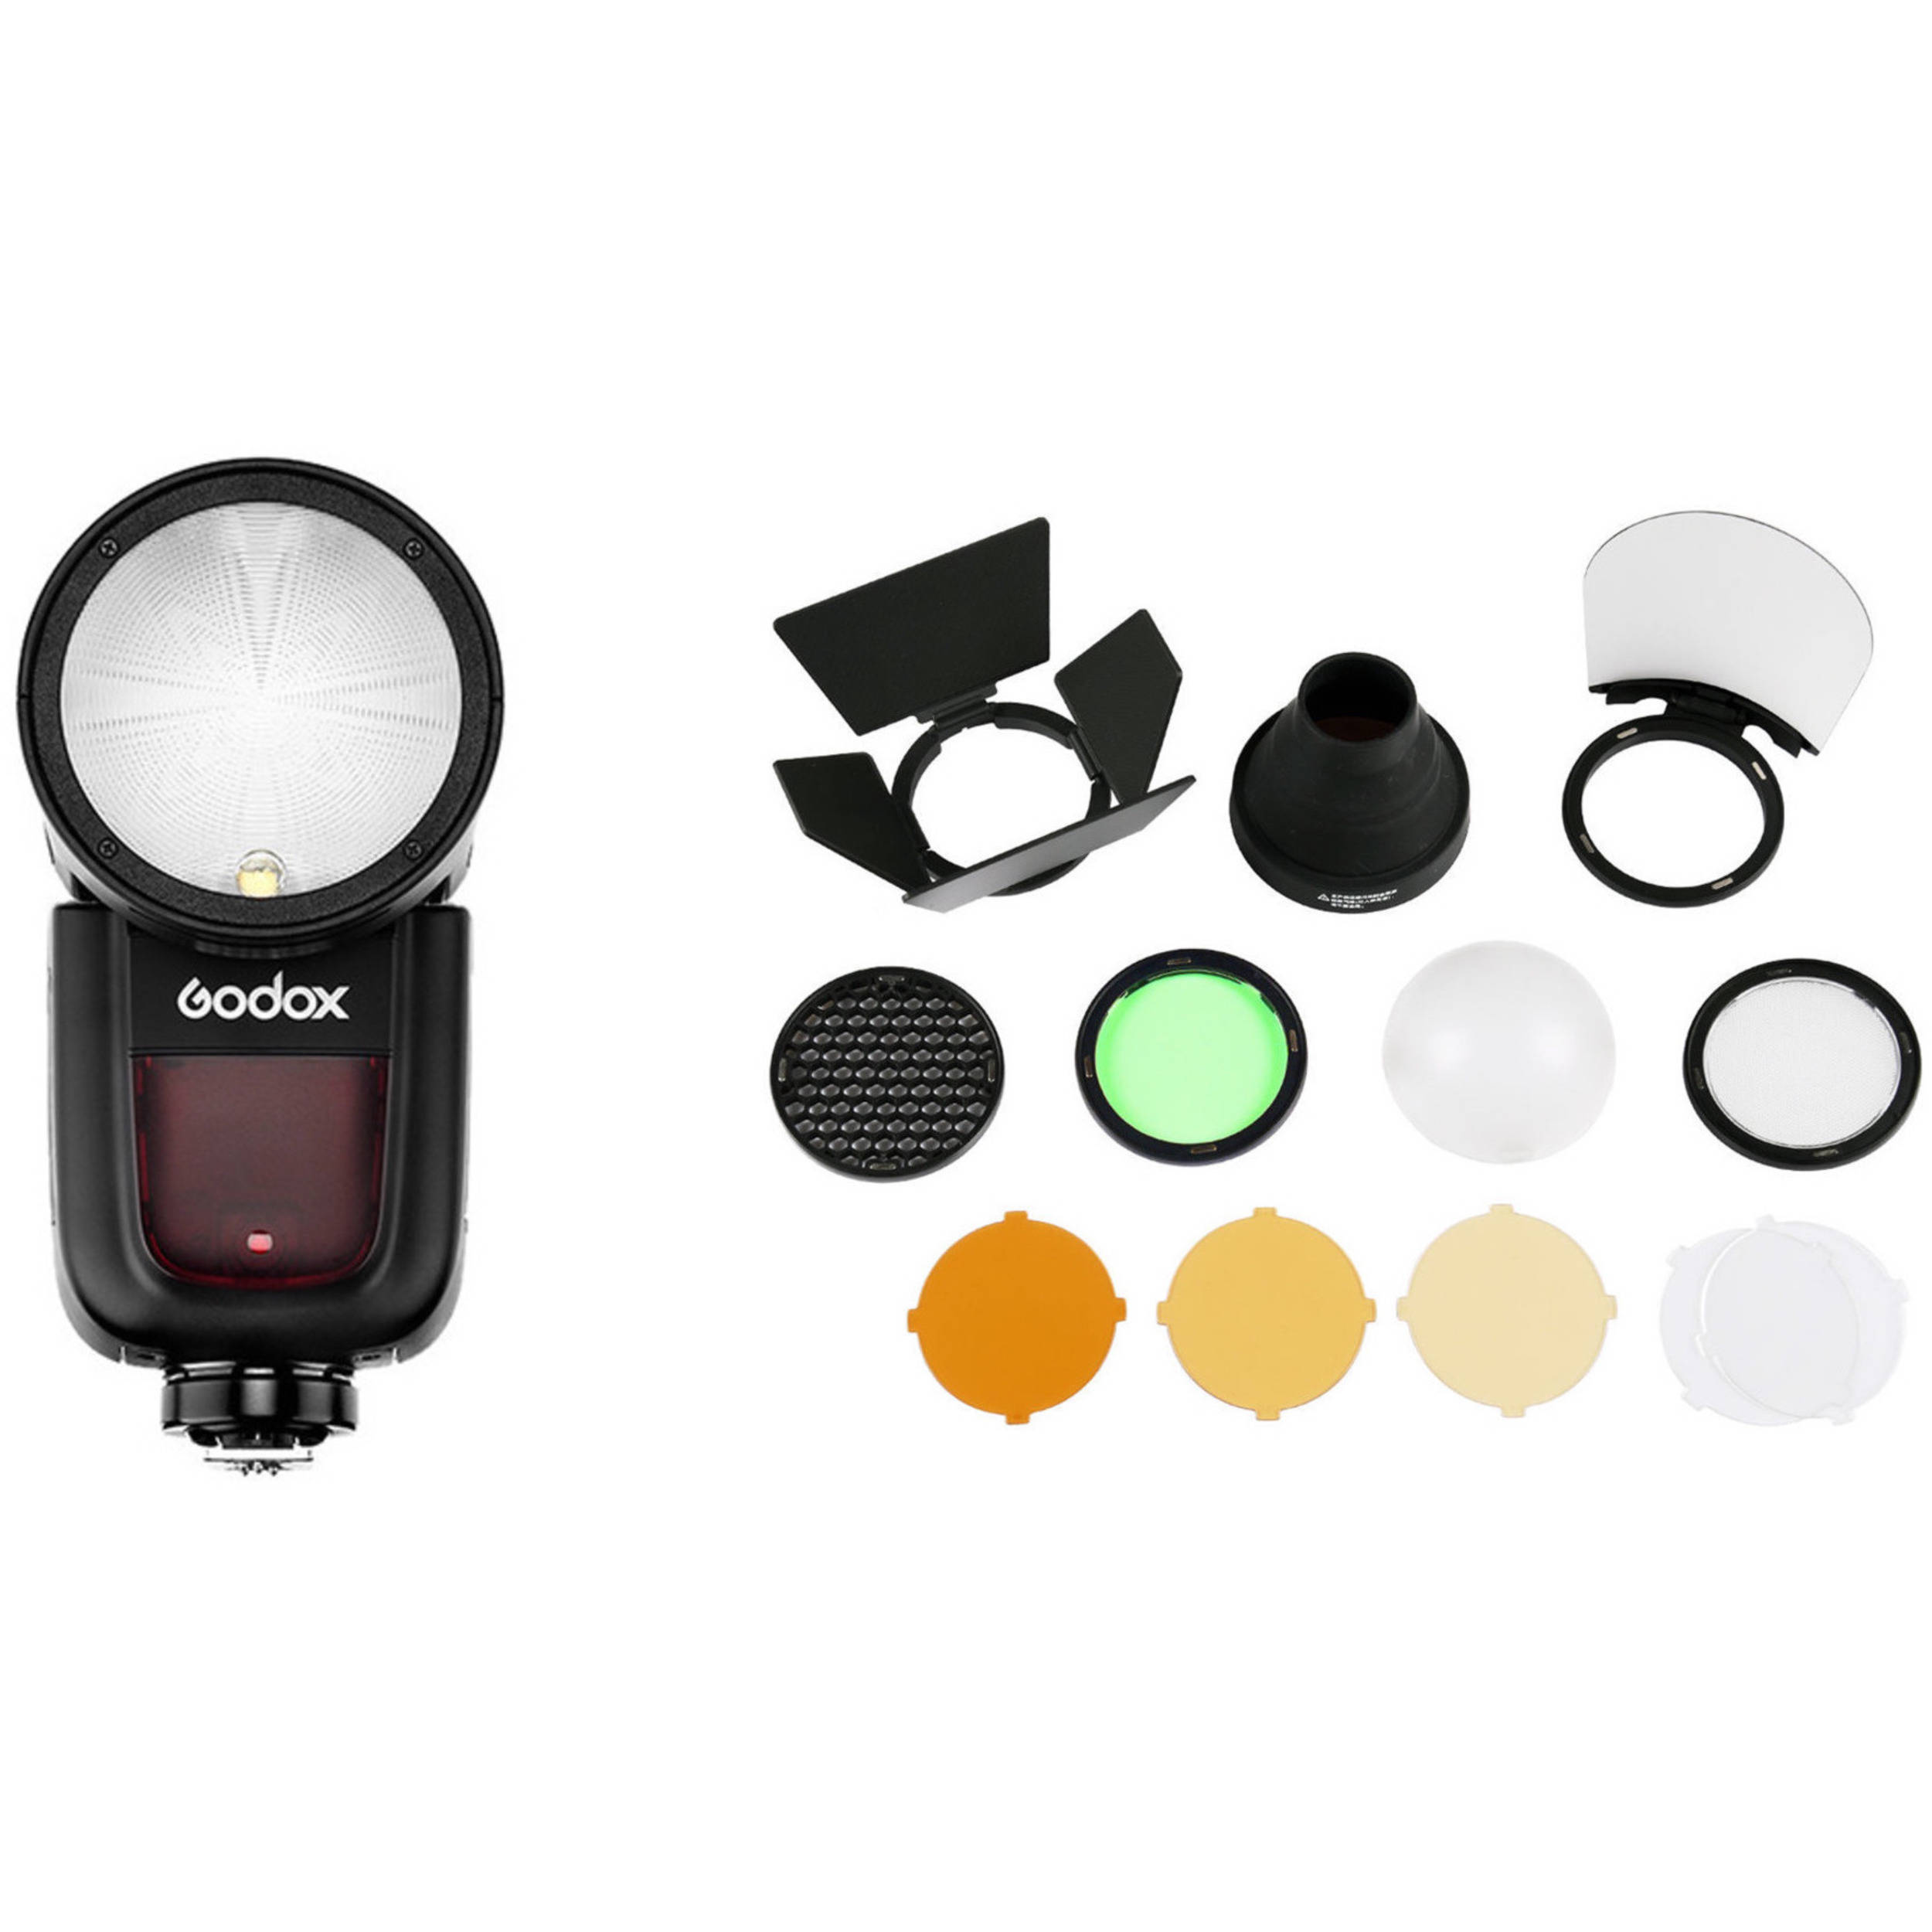 Godox V1 Flash With Accessories Kit For Nikon B H Photo Video